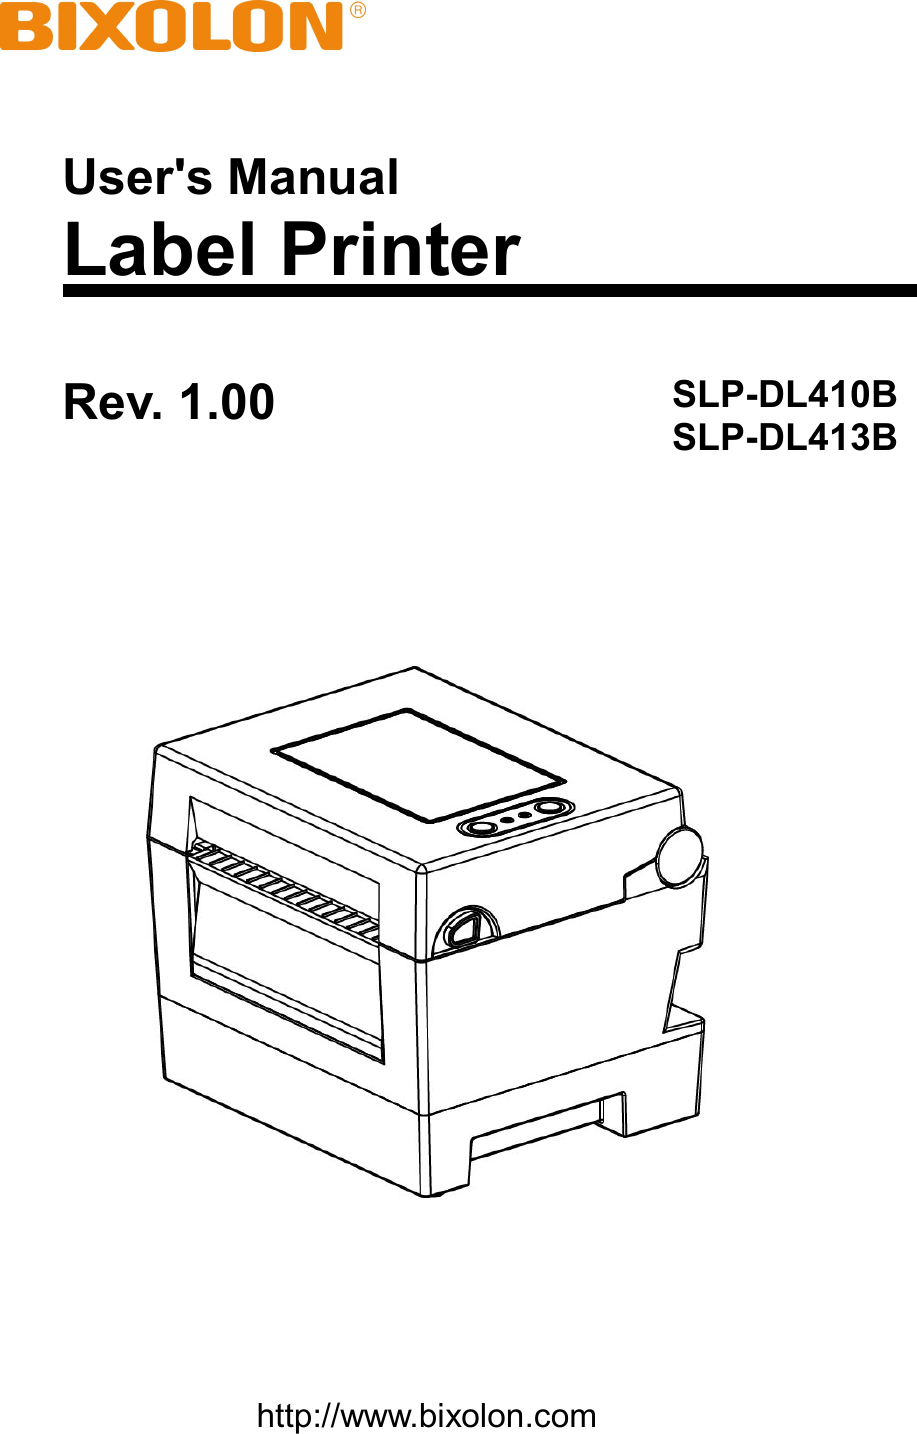      User&apos;s Manual Label Printer Rev. 1.00 SLP-DL410B SLP-DL413B     http://www.bixolon.com 